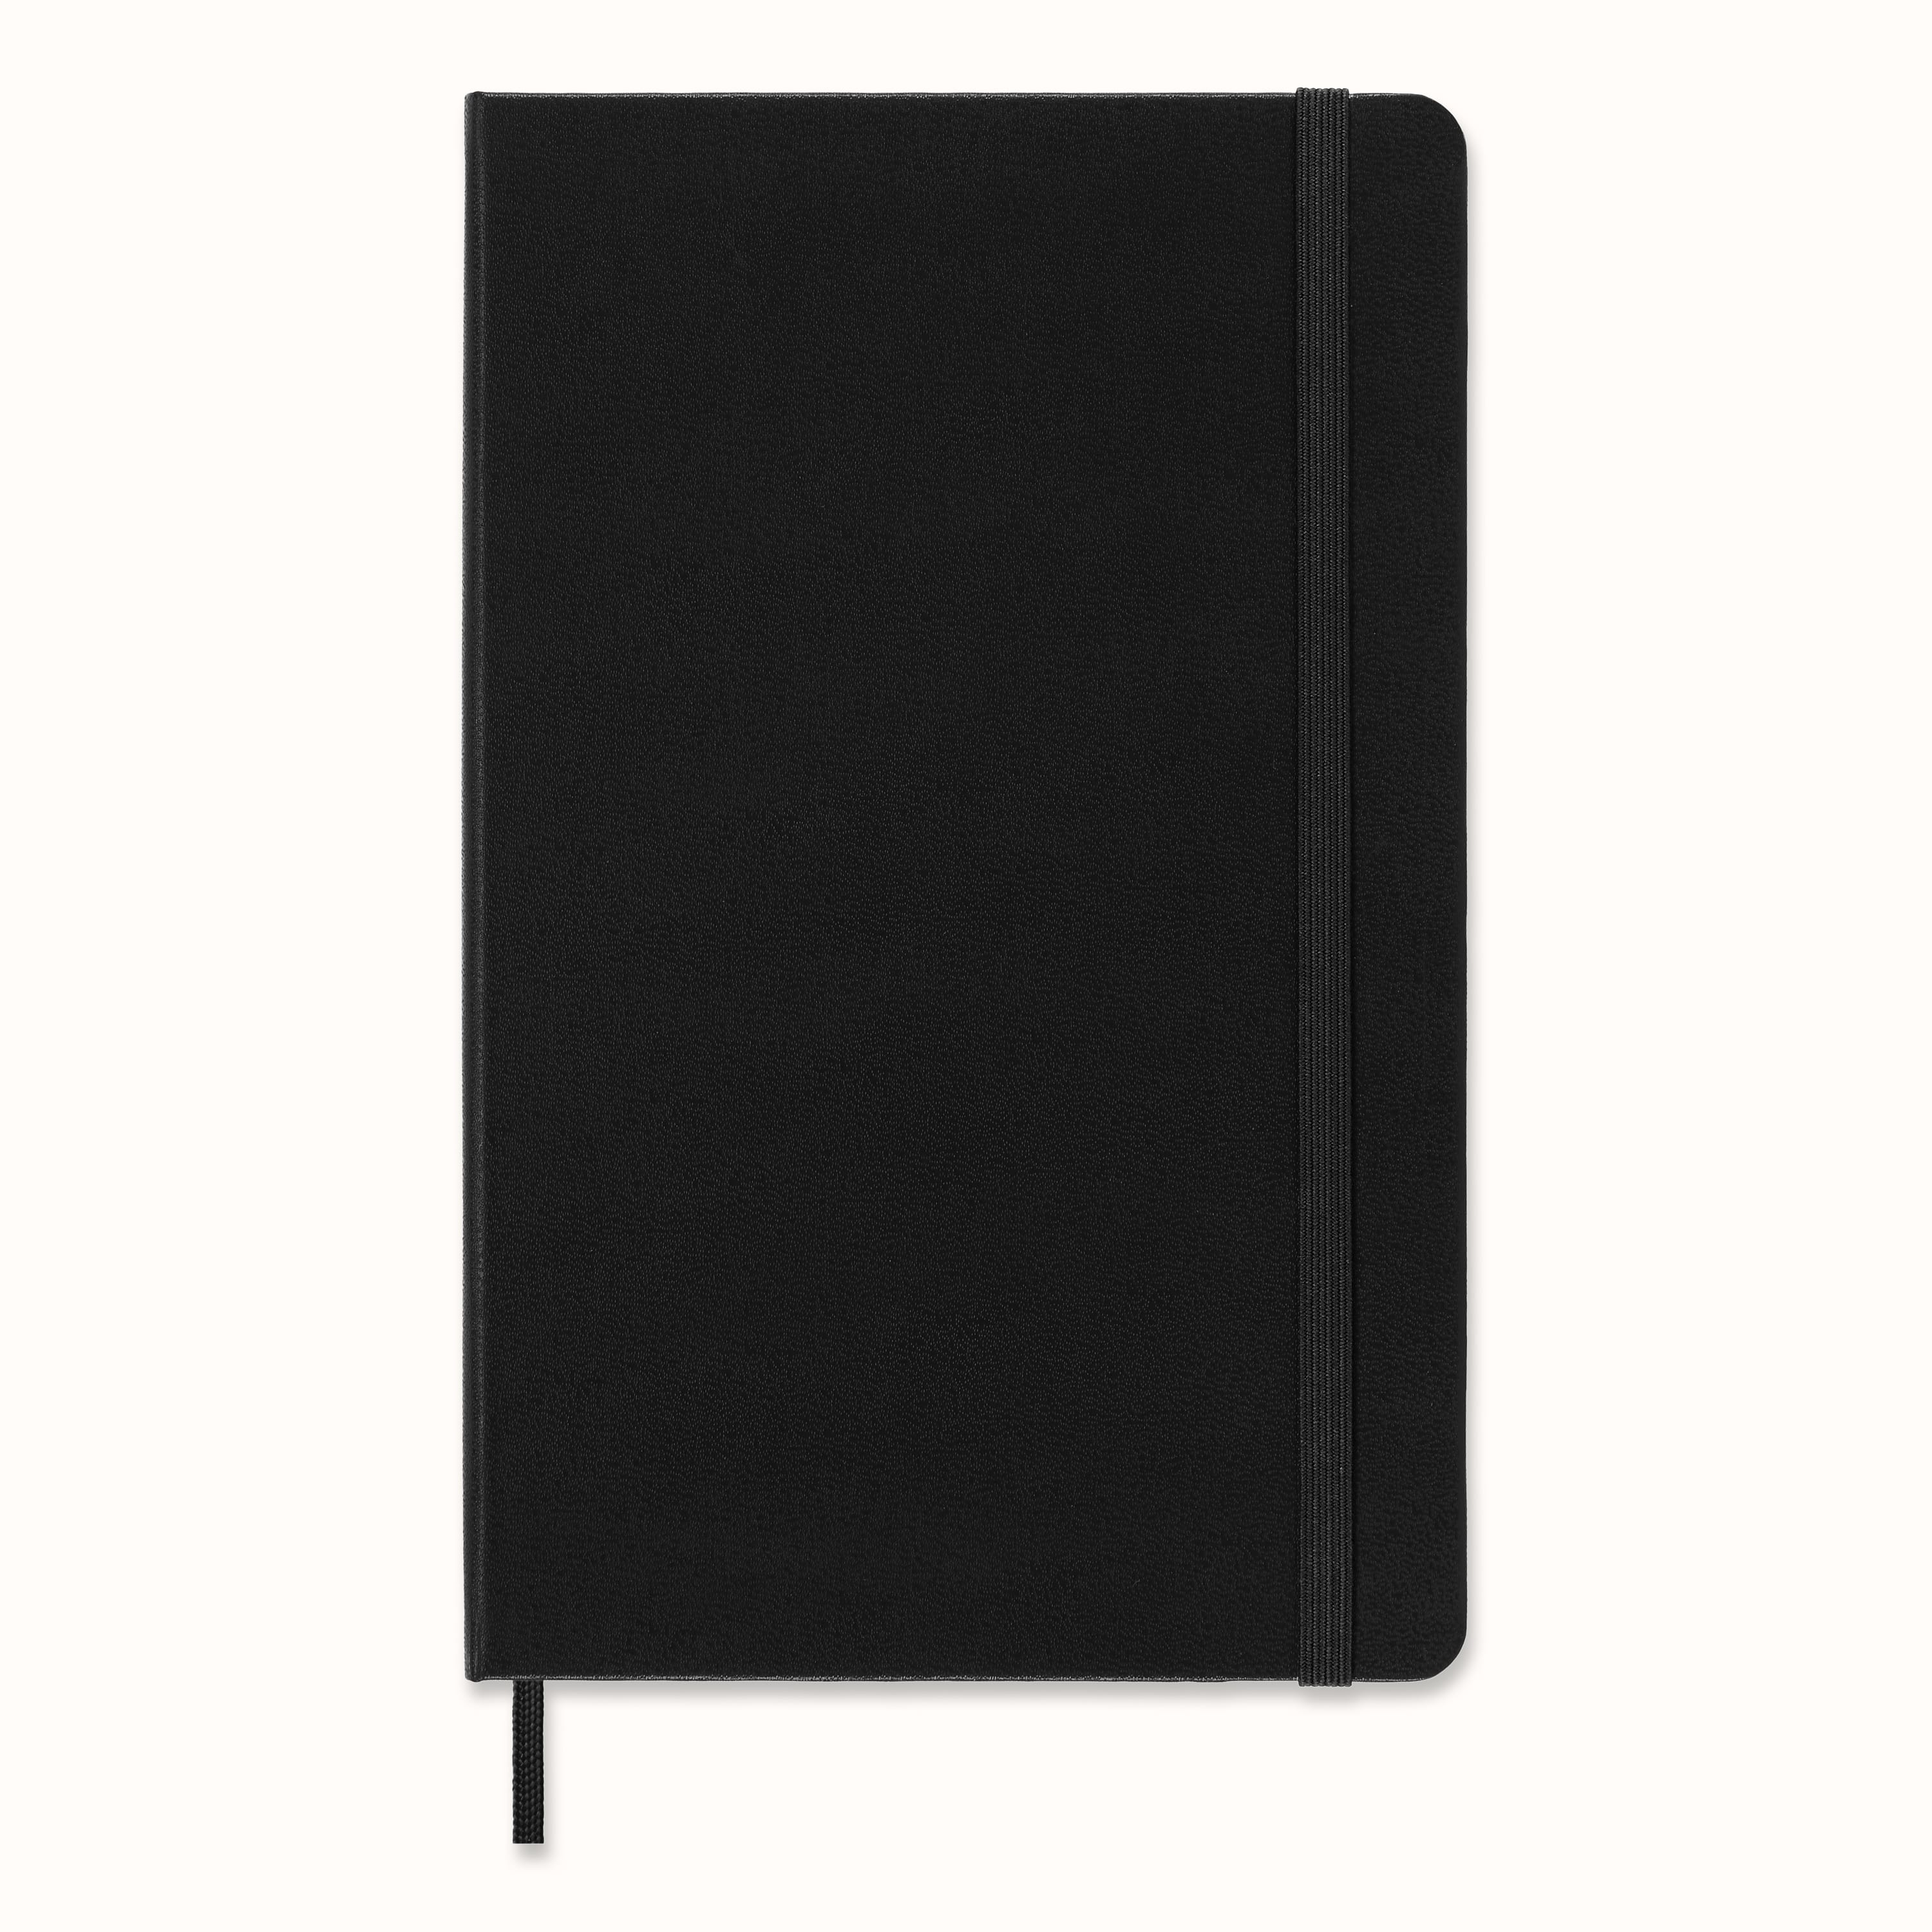 Moleskine Classic Extra Large Notebook Black Hard Cover Squared